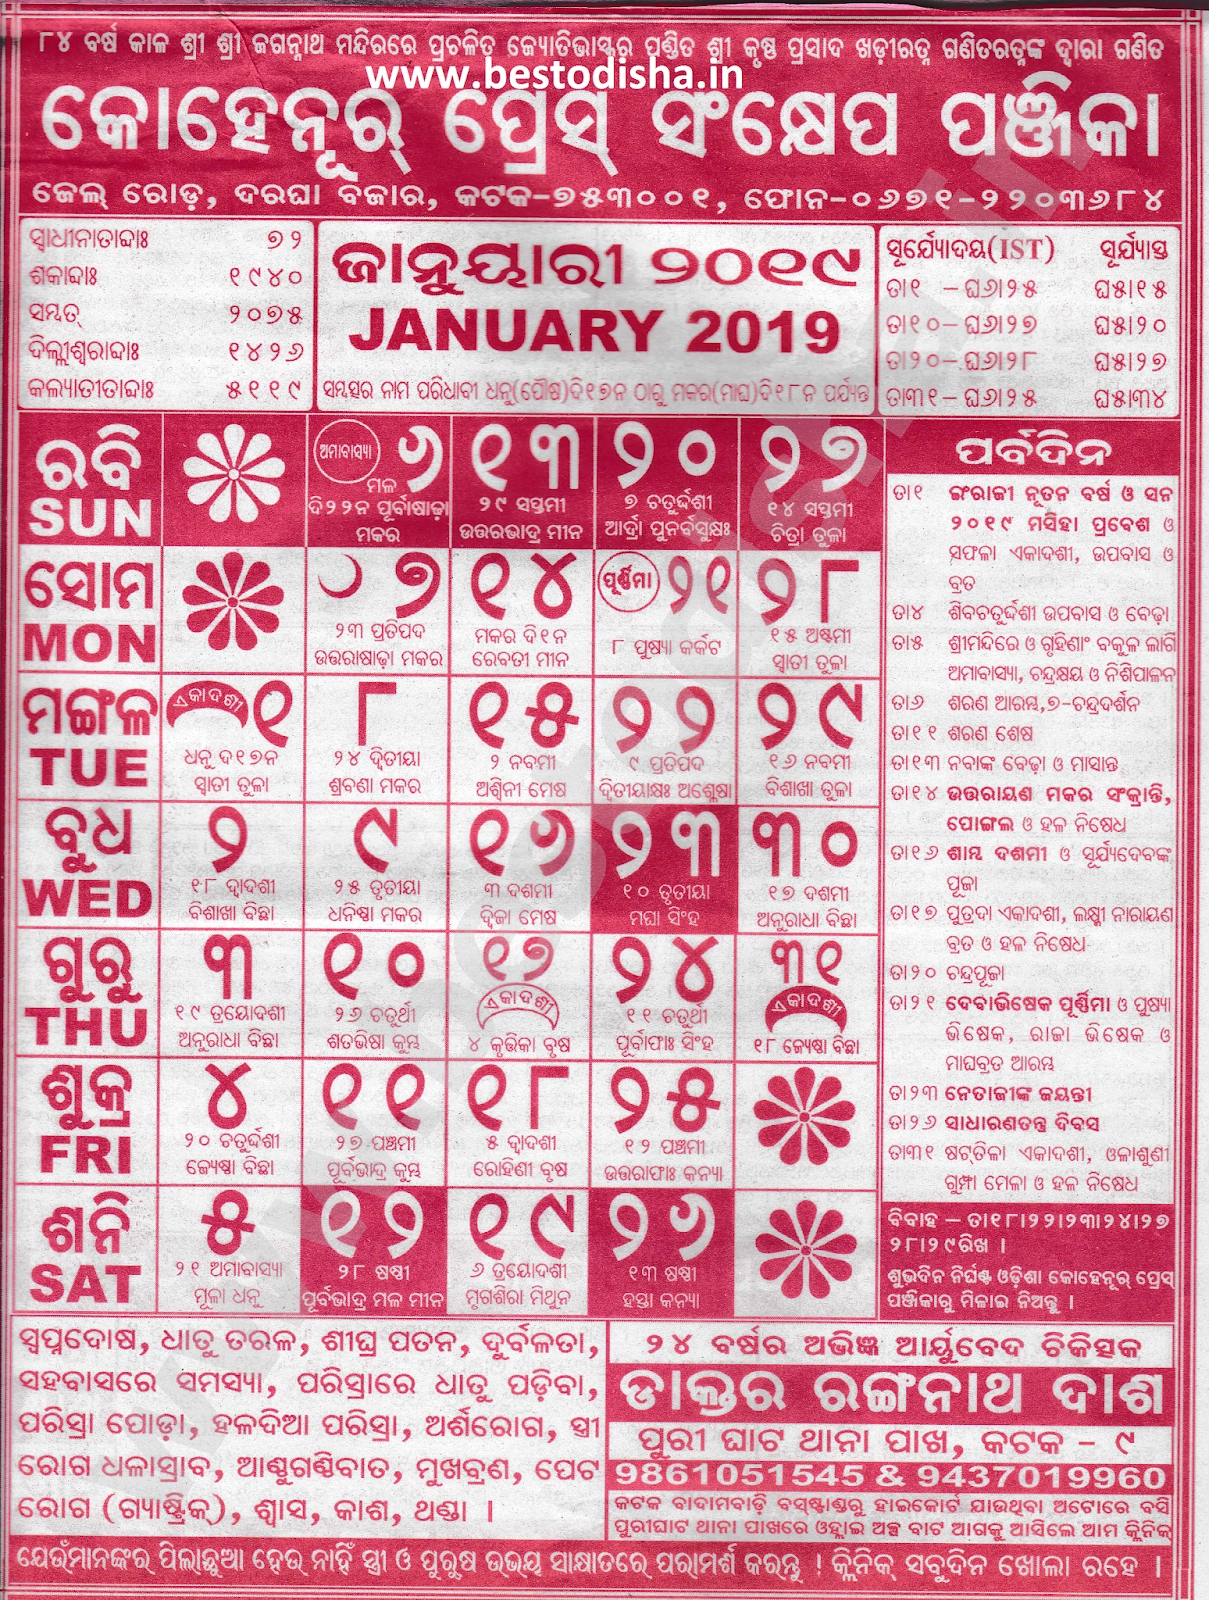 Best Odisha: Kohinoor Odia Calendar 2019 Pdf Download Here-January 2020 Calendar Odia